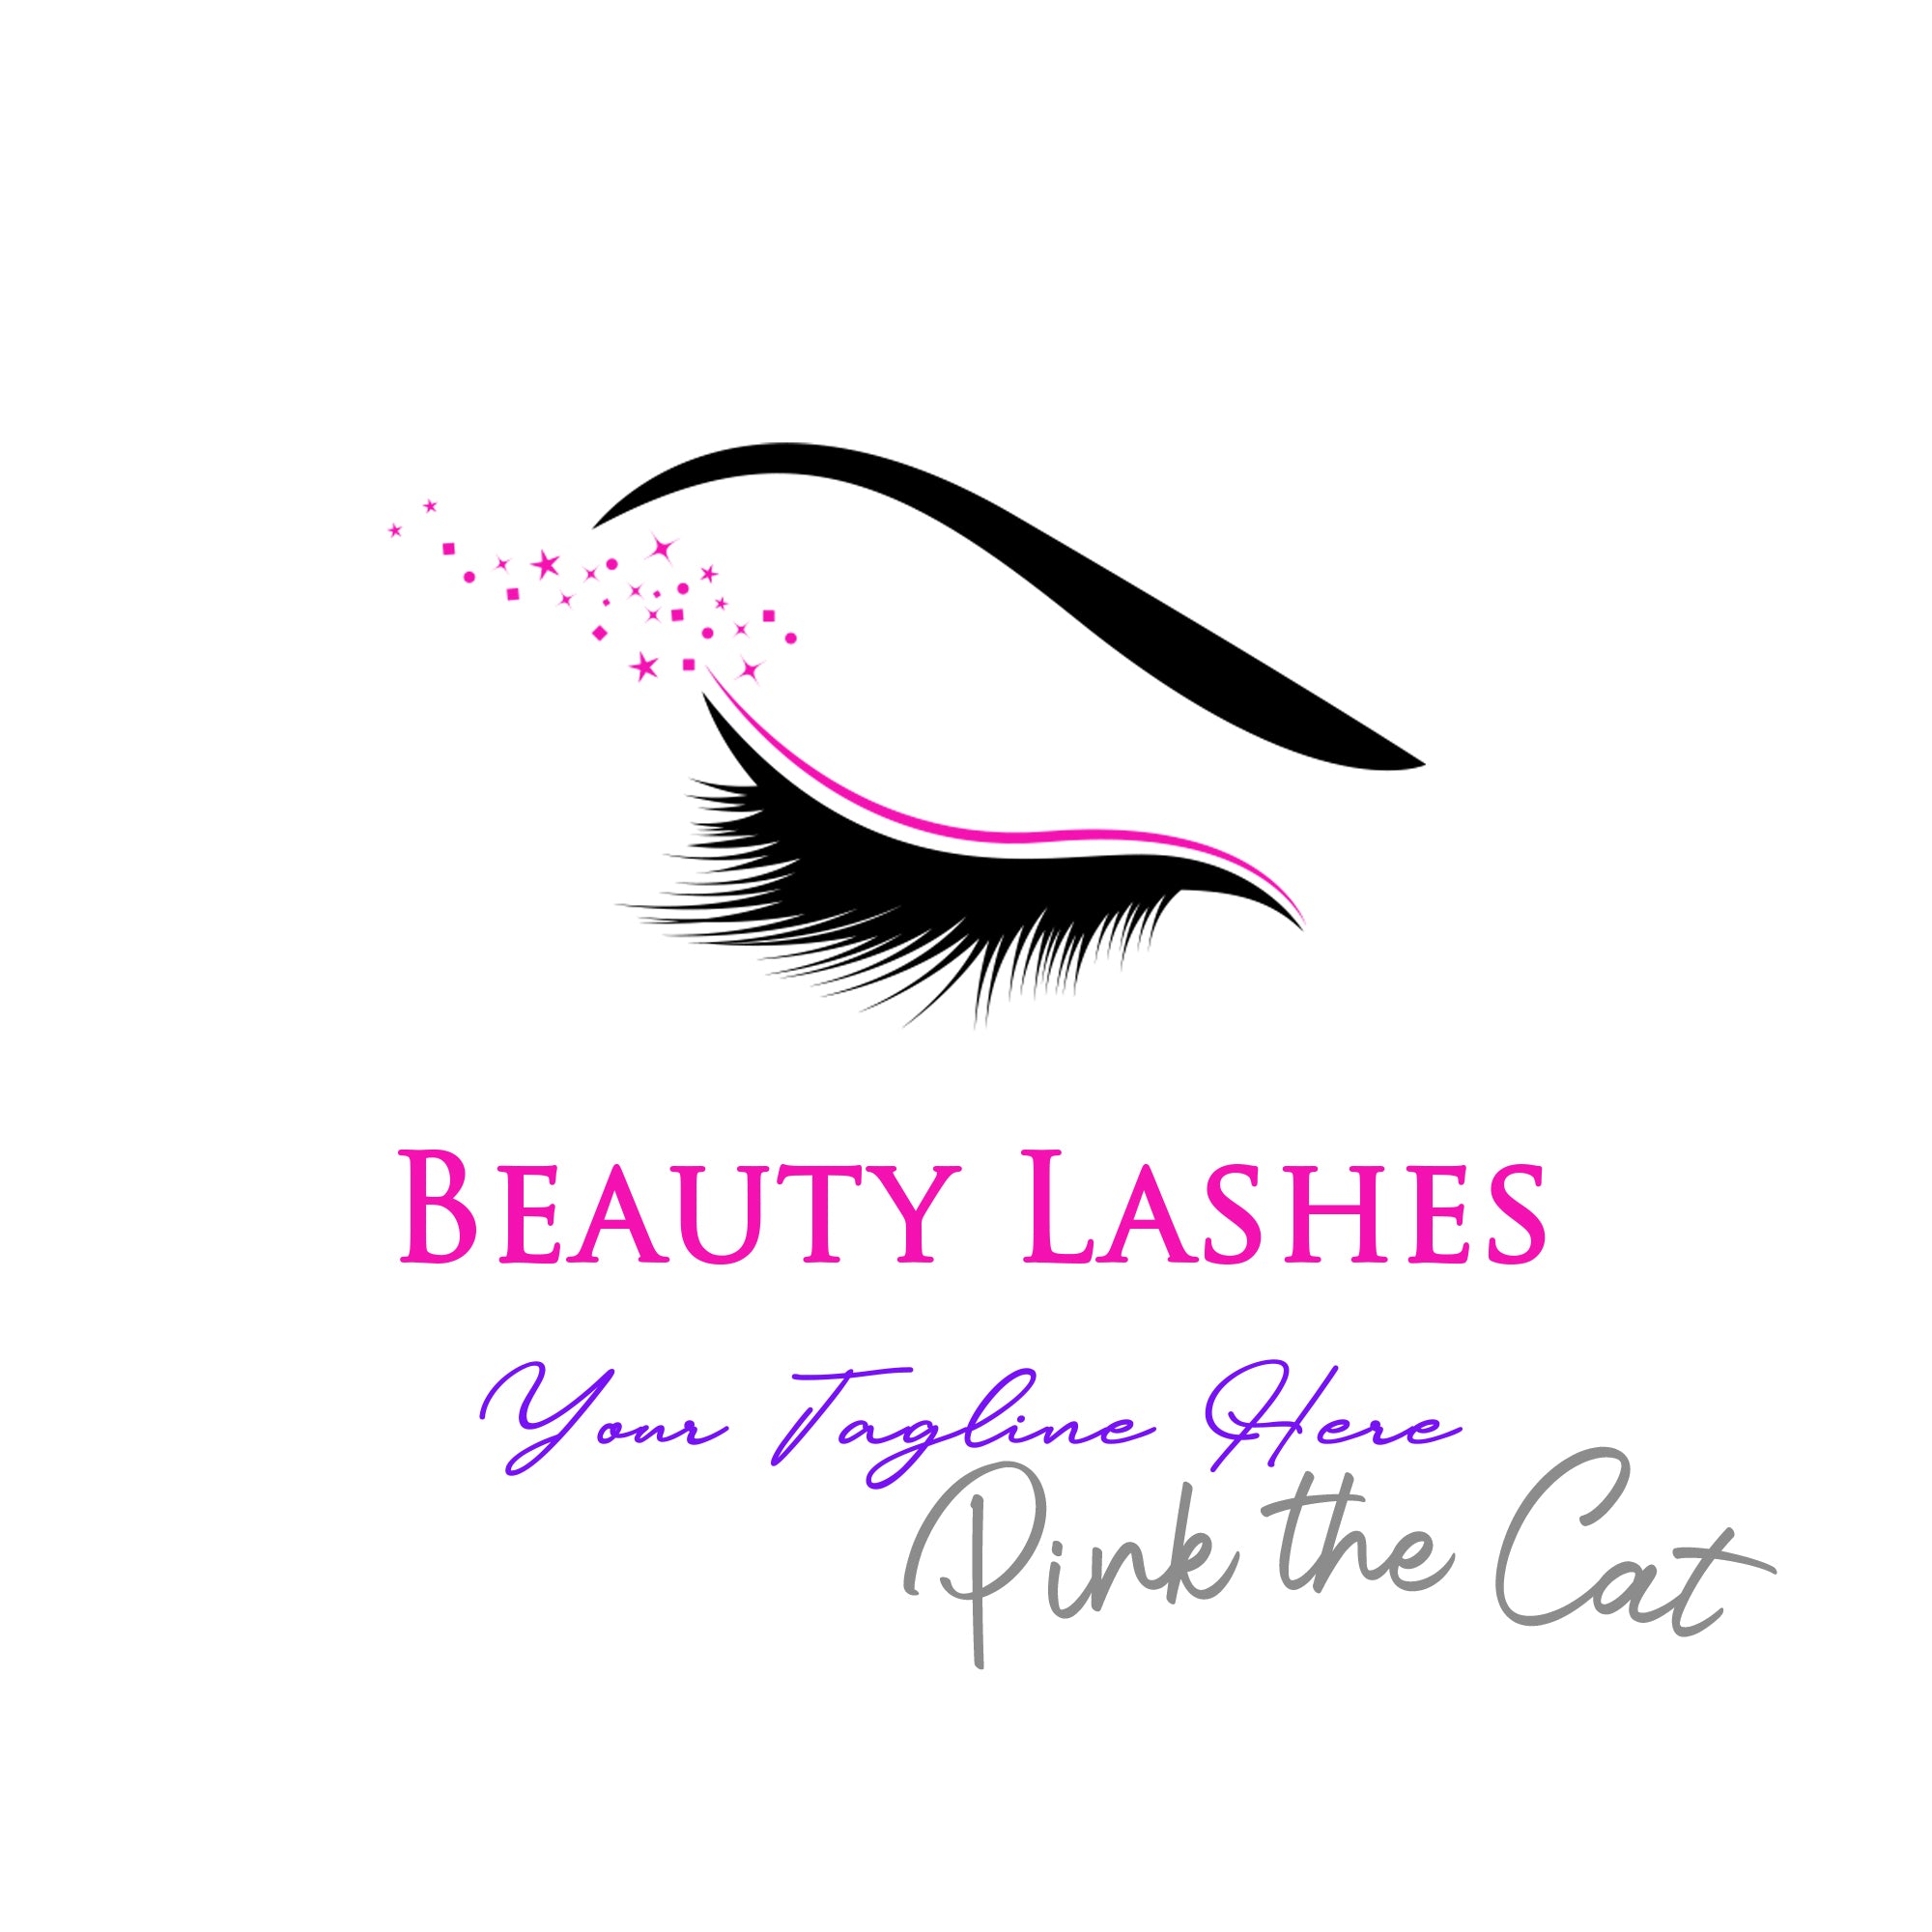 Premade eyes makeup beauty logo design